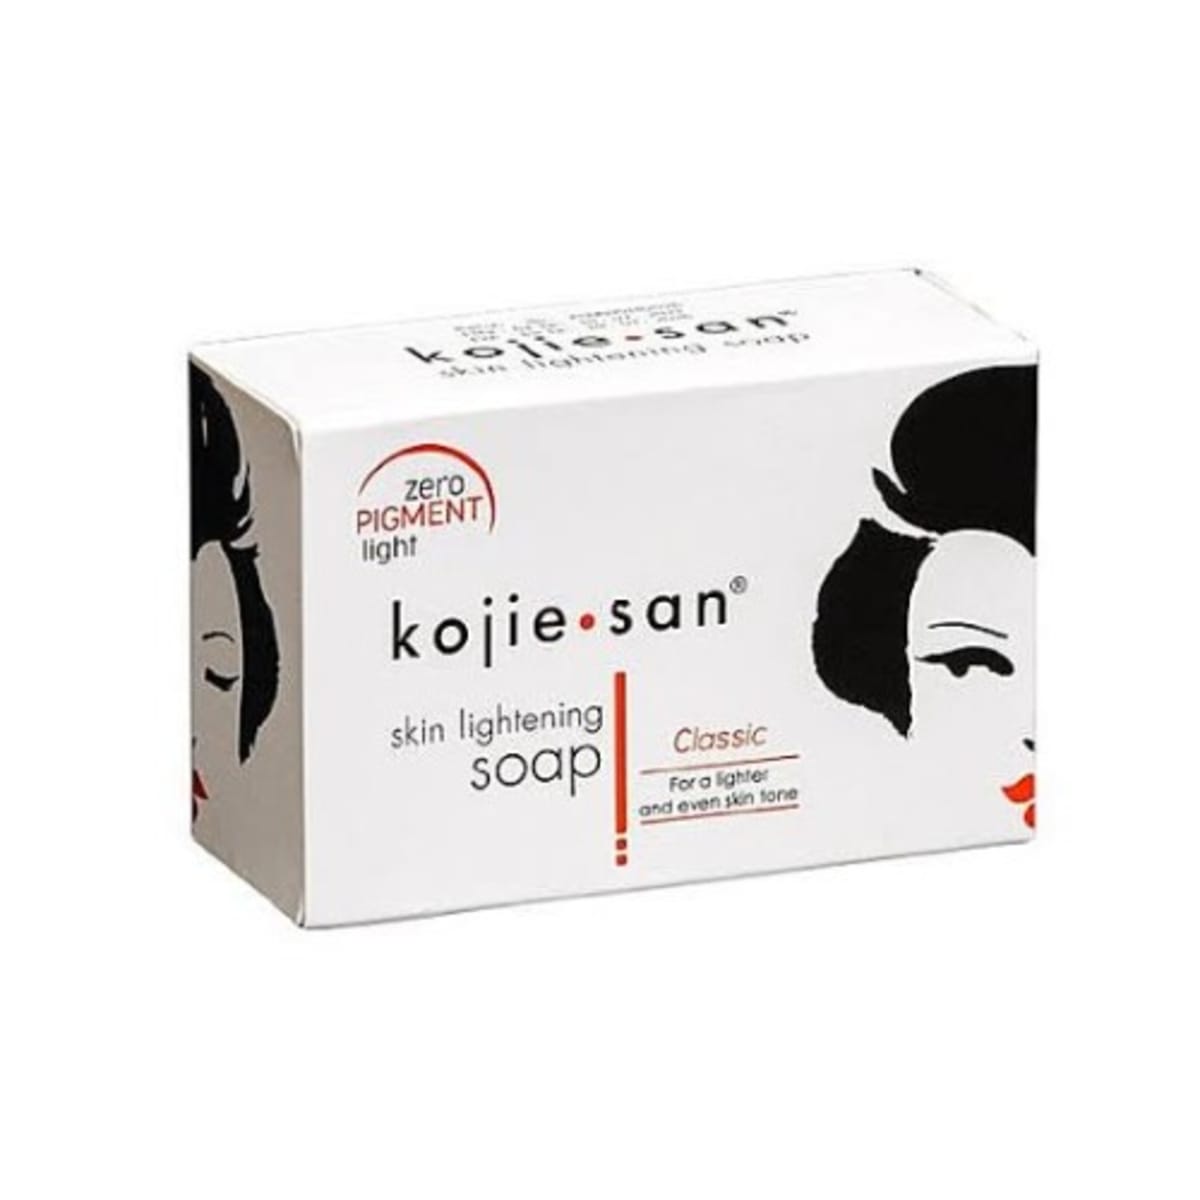 Original Kojie San Soap 135g - Skin Lightening Bar - Buy Online